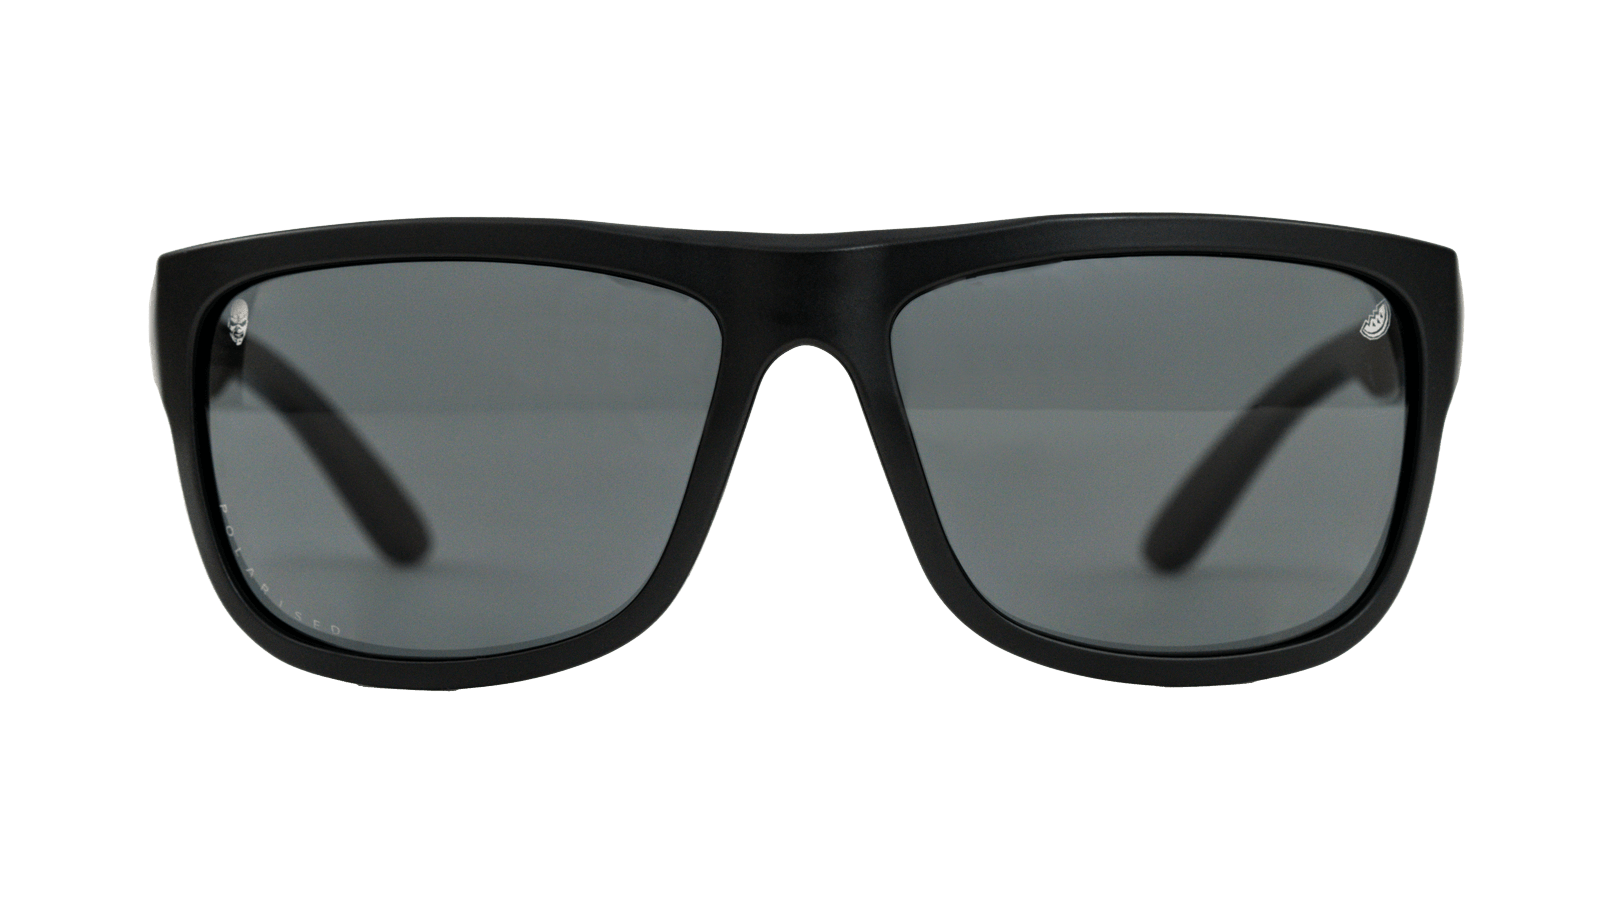 Halfway Sunglasses polarised Iron-Maiden Smoke Front View